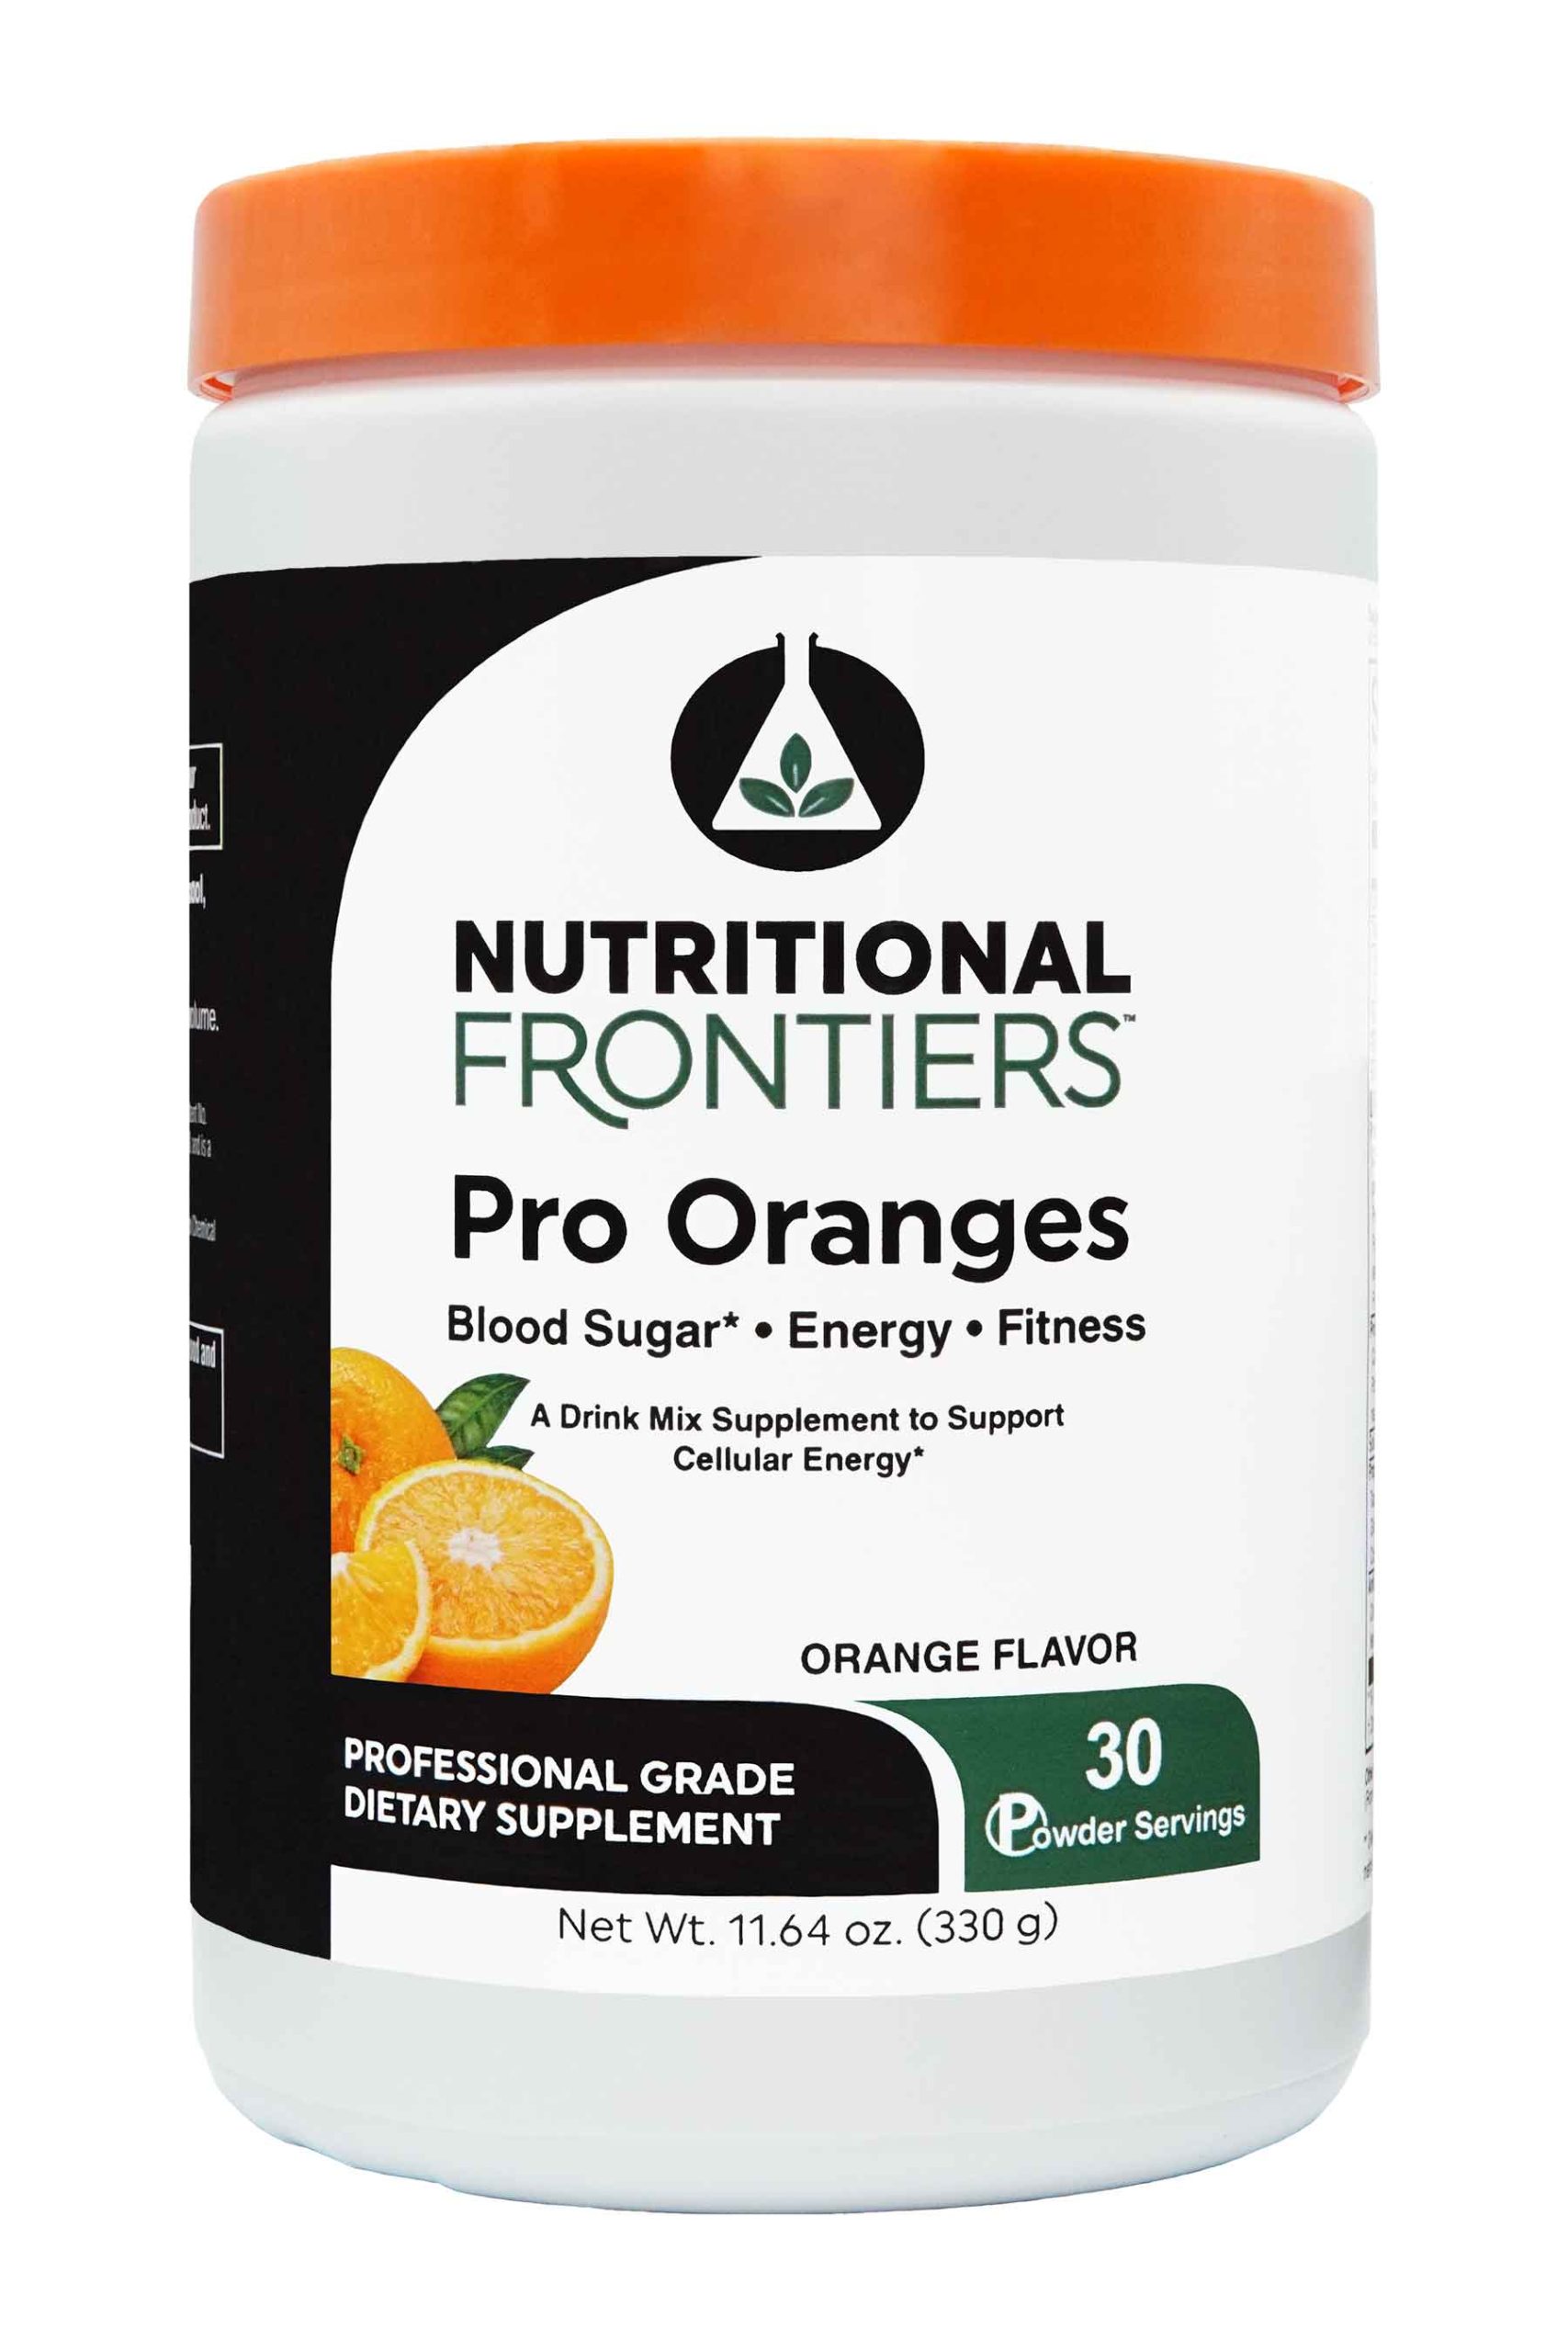 Pro Oranges – Nutritional Frontiers